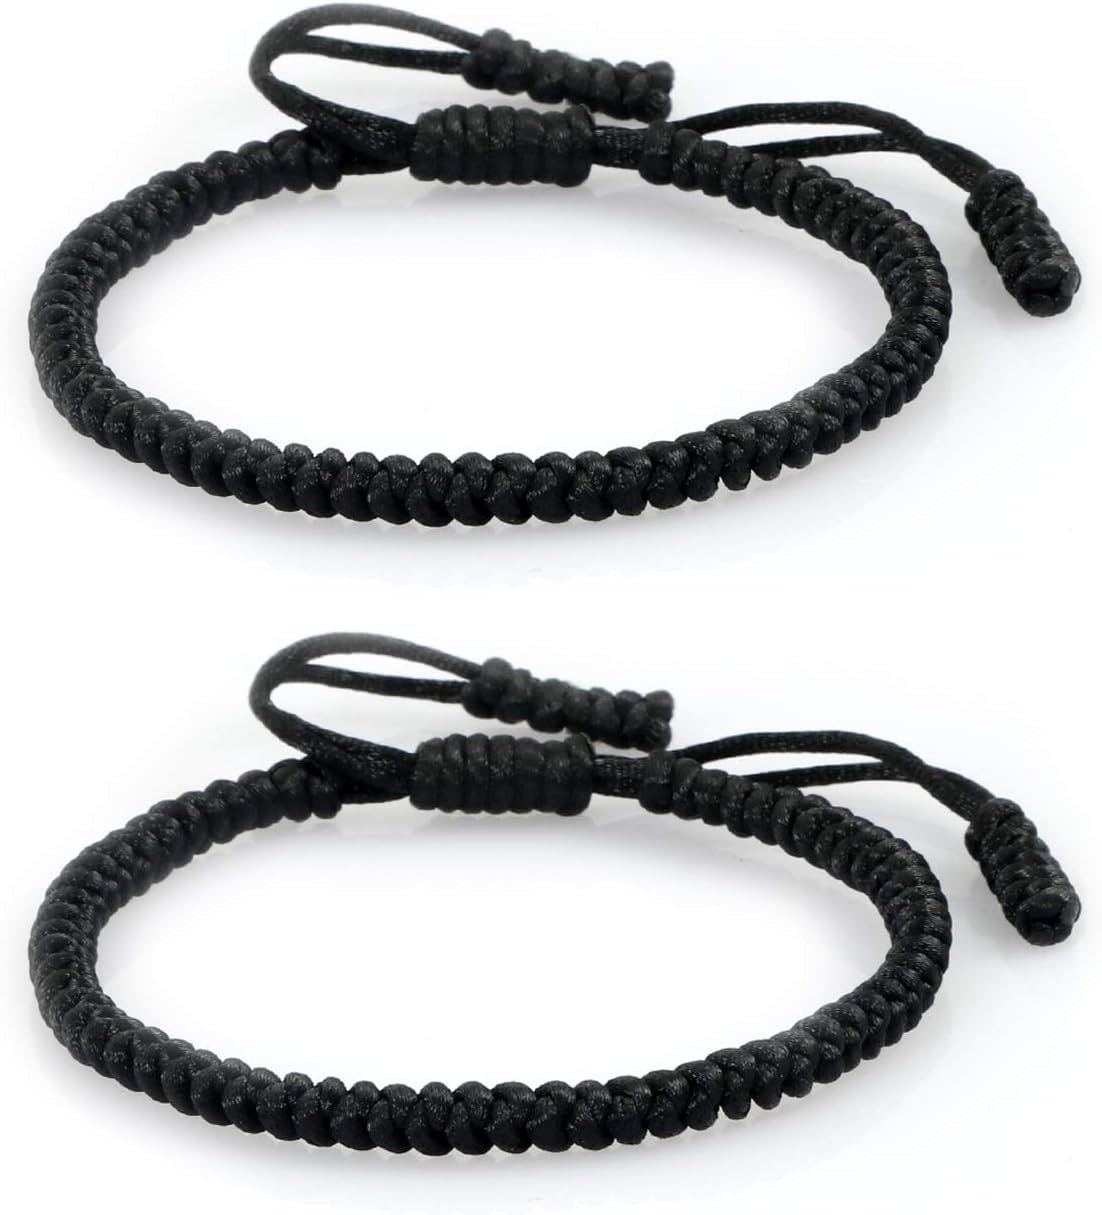 2pcs/set Tibetan Buddhist Woven Bracelets Lucky Protection Red String Knot Rope Handmade Friendship Bracelet Review